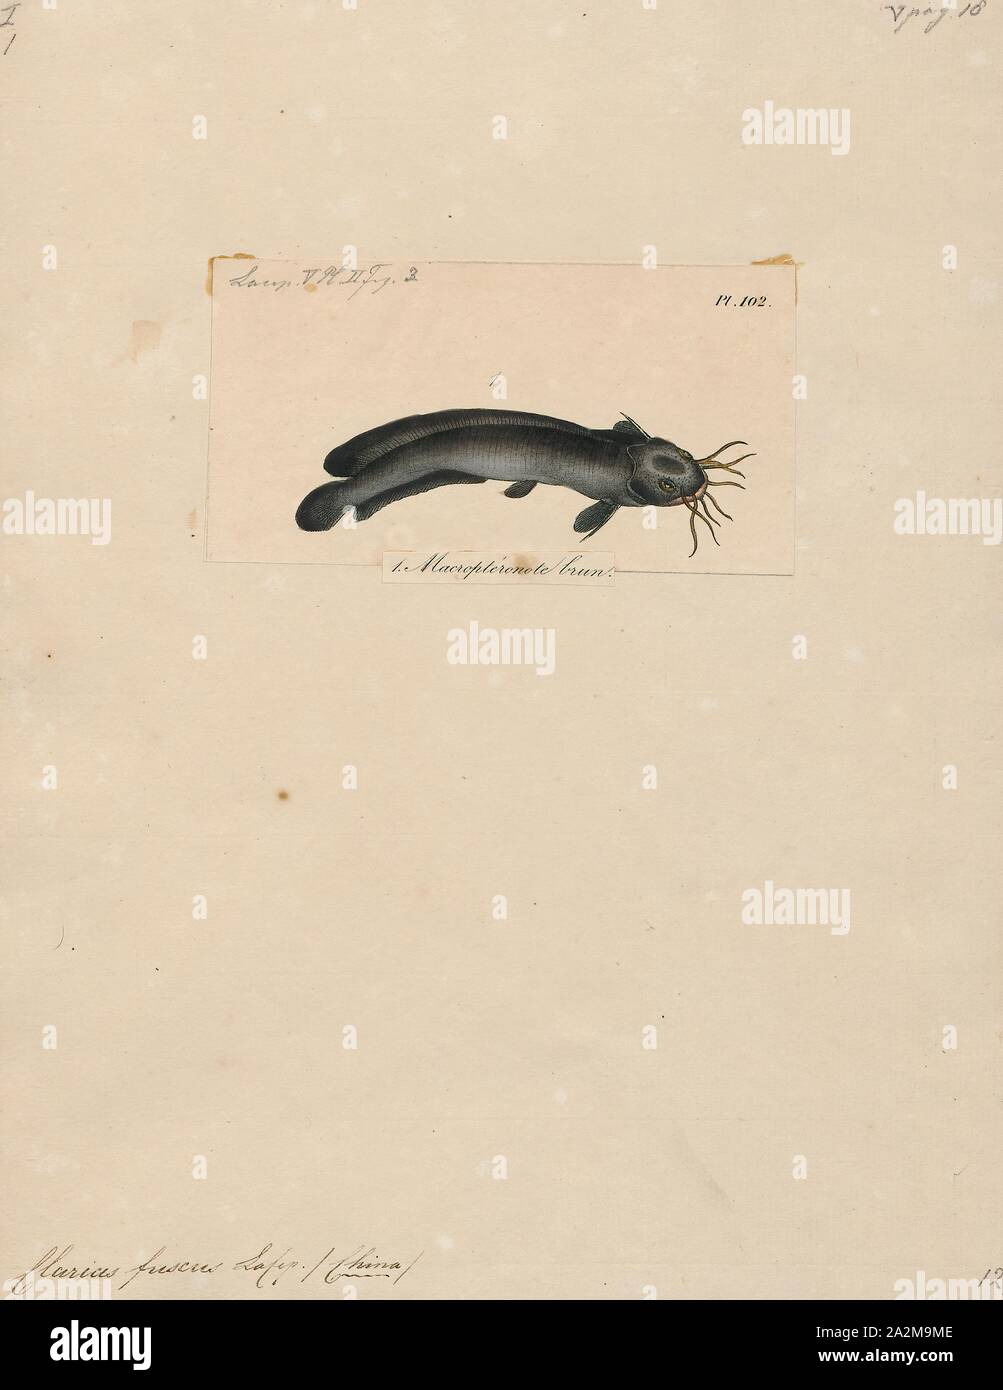 Clarias fuscus, Print, Whitespotted freshwater catfish, 1700-1880 Stock Photo